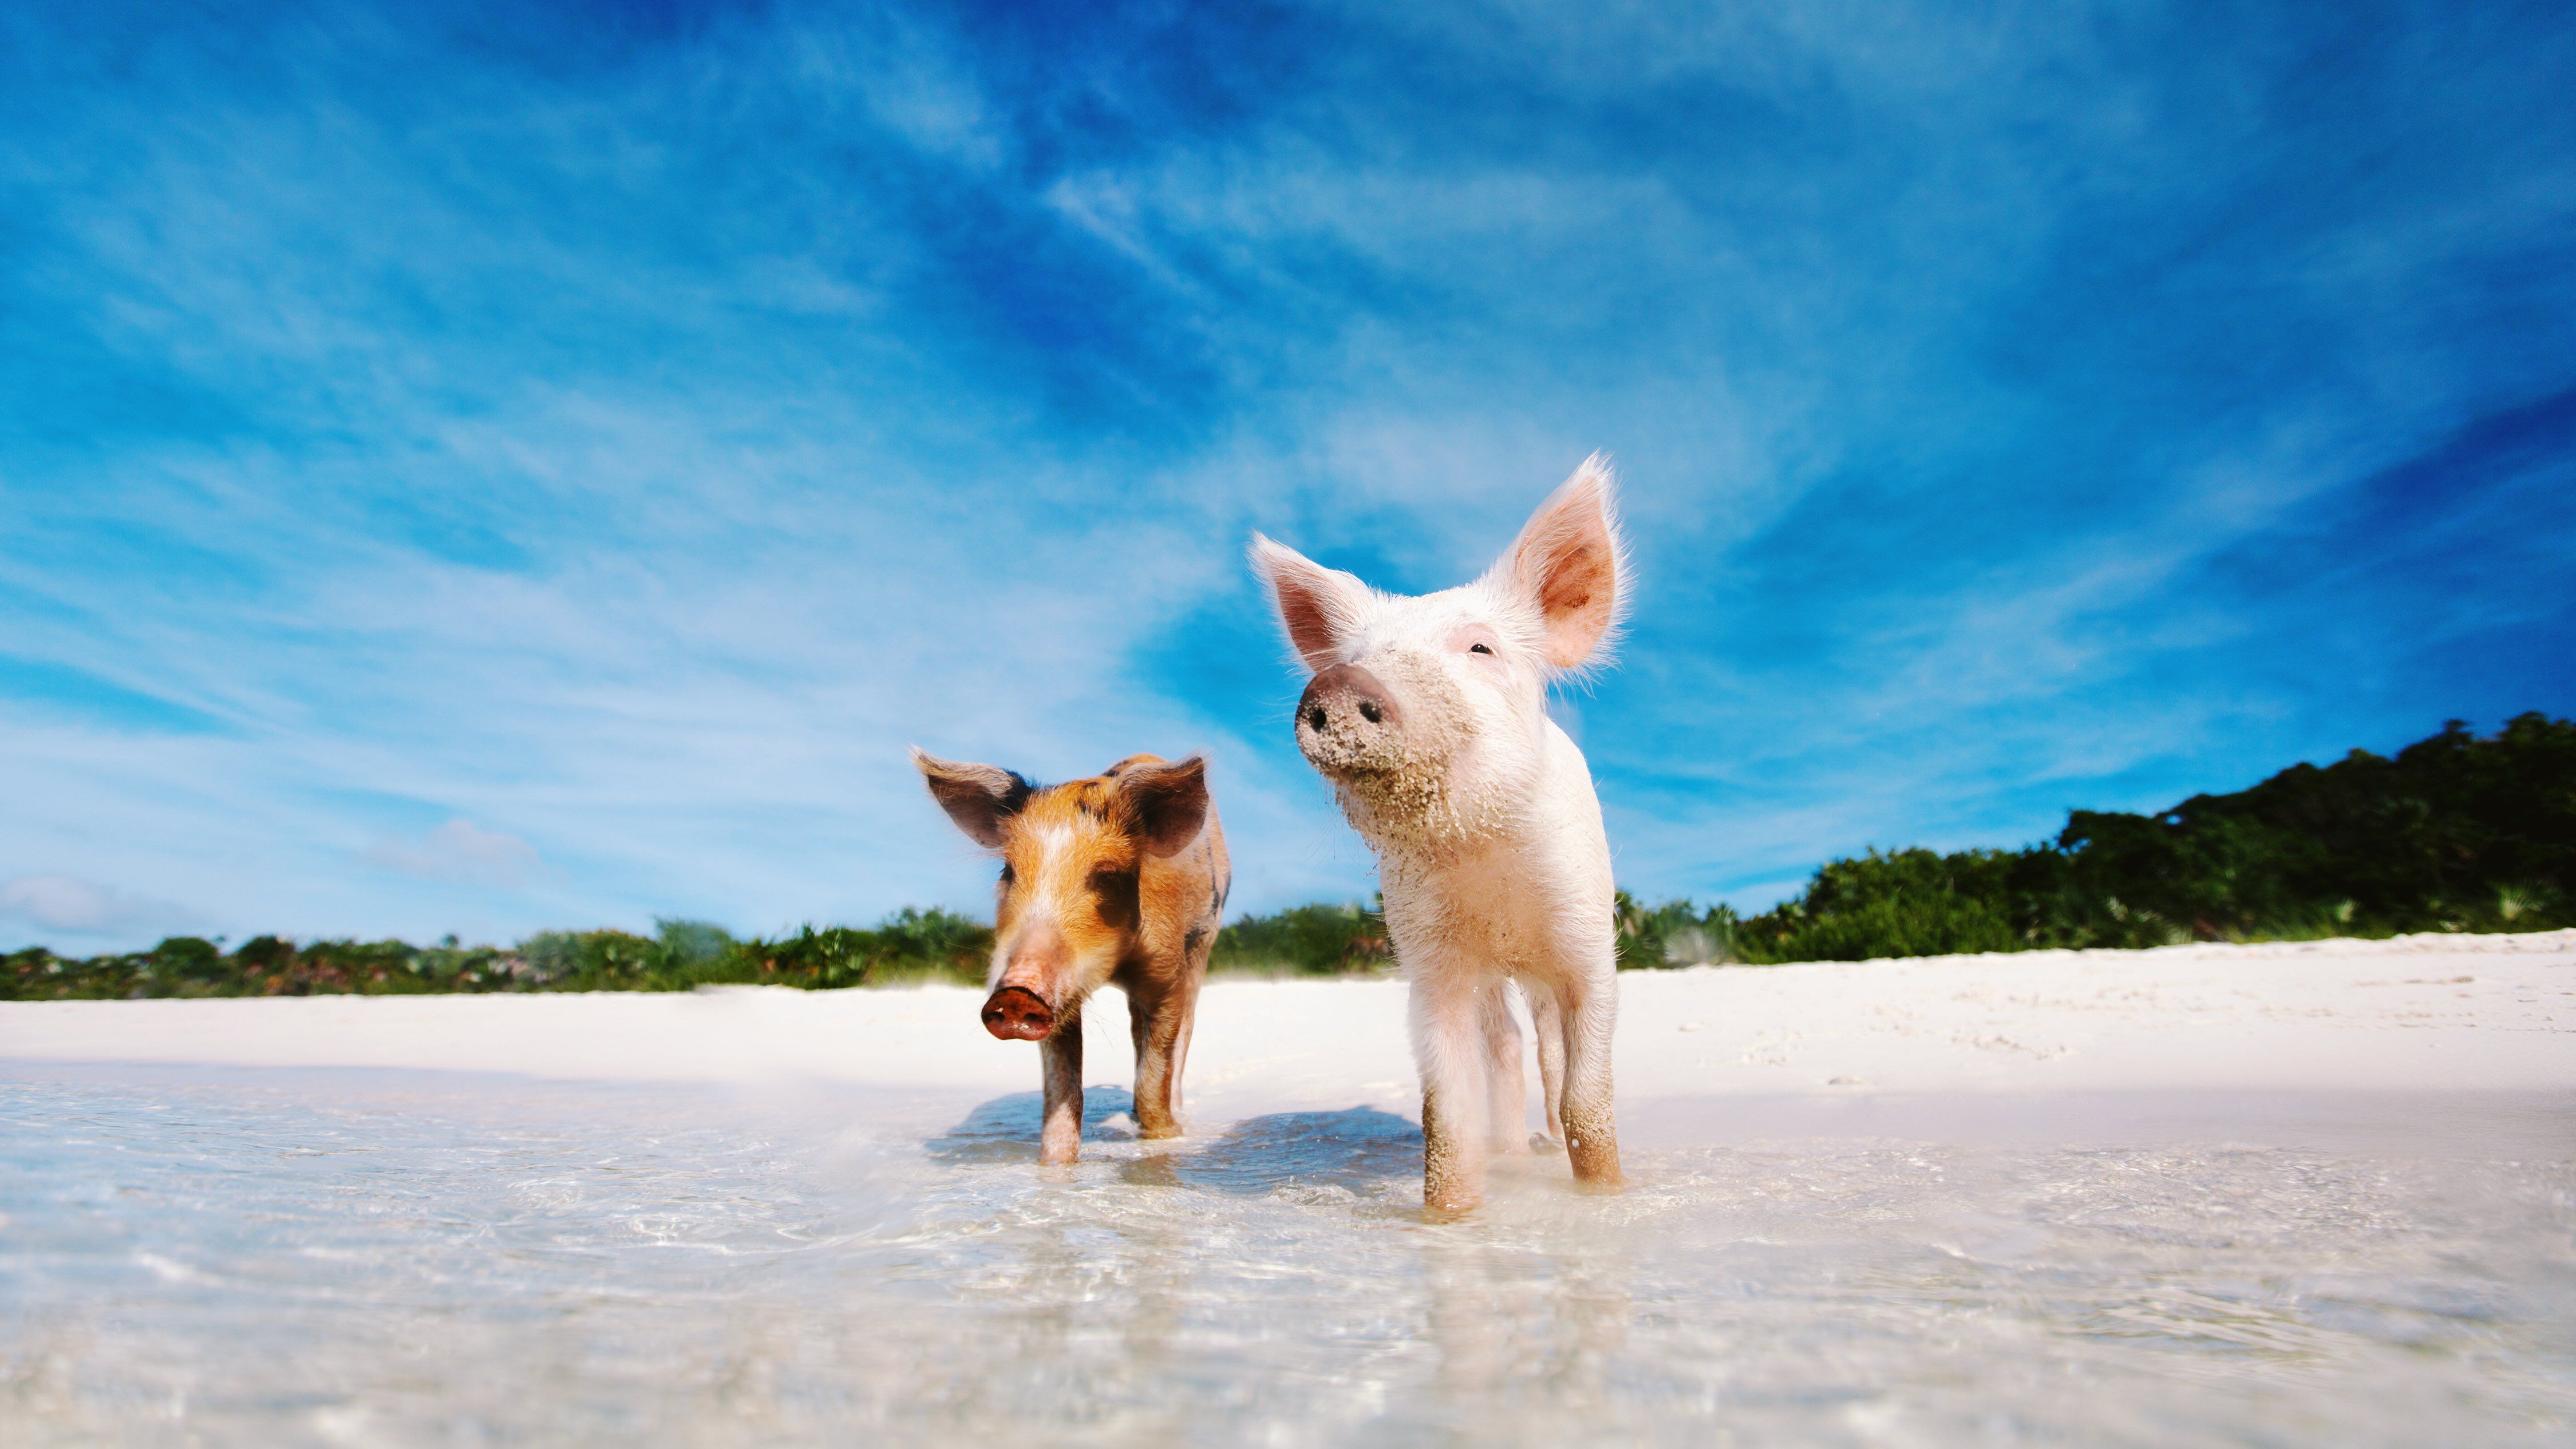 Pigs on an Island